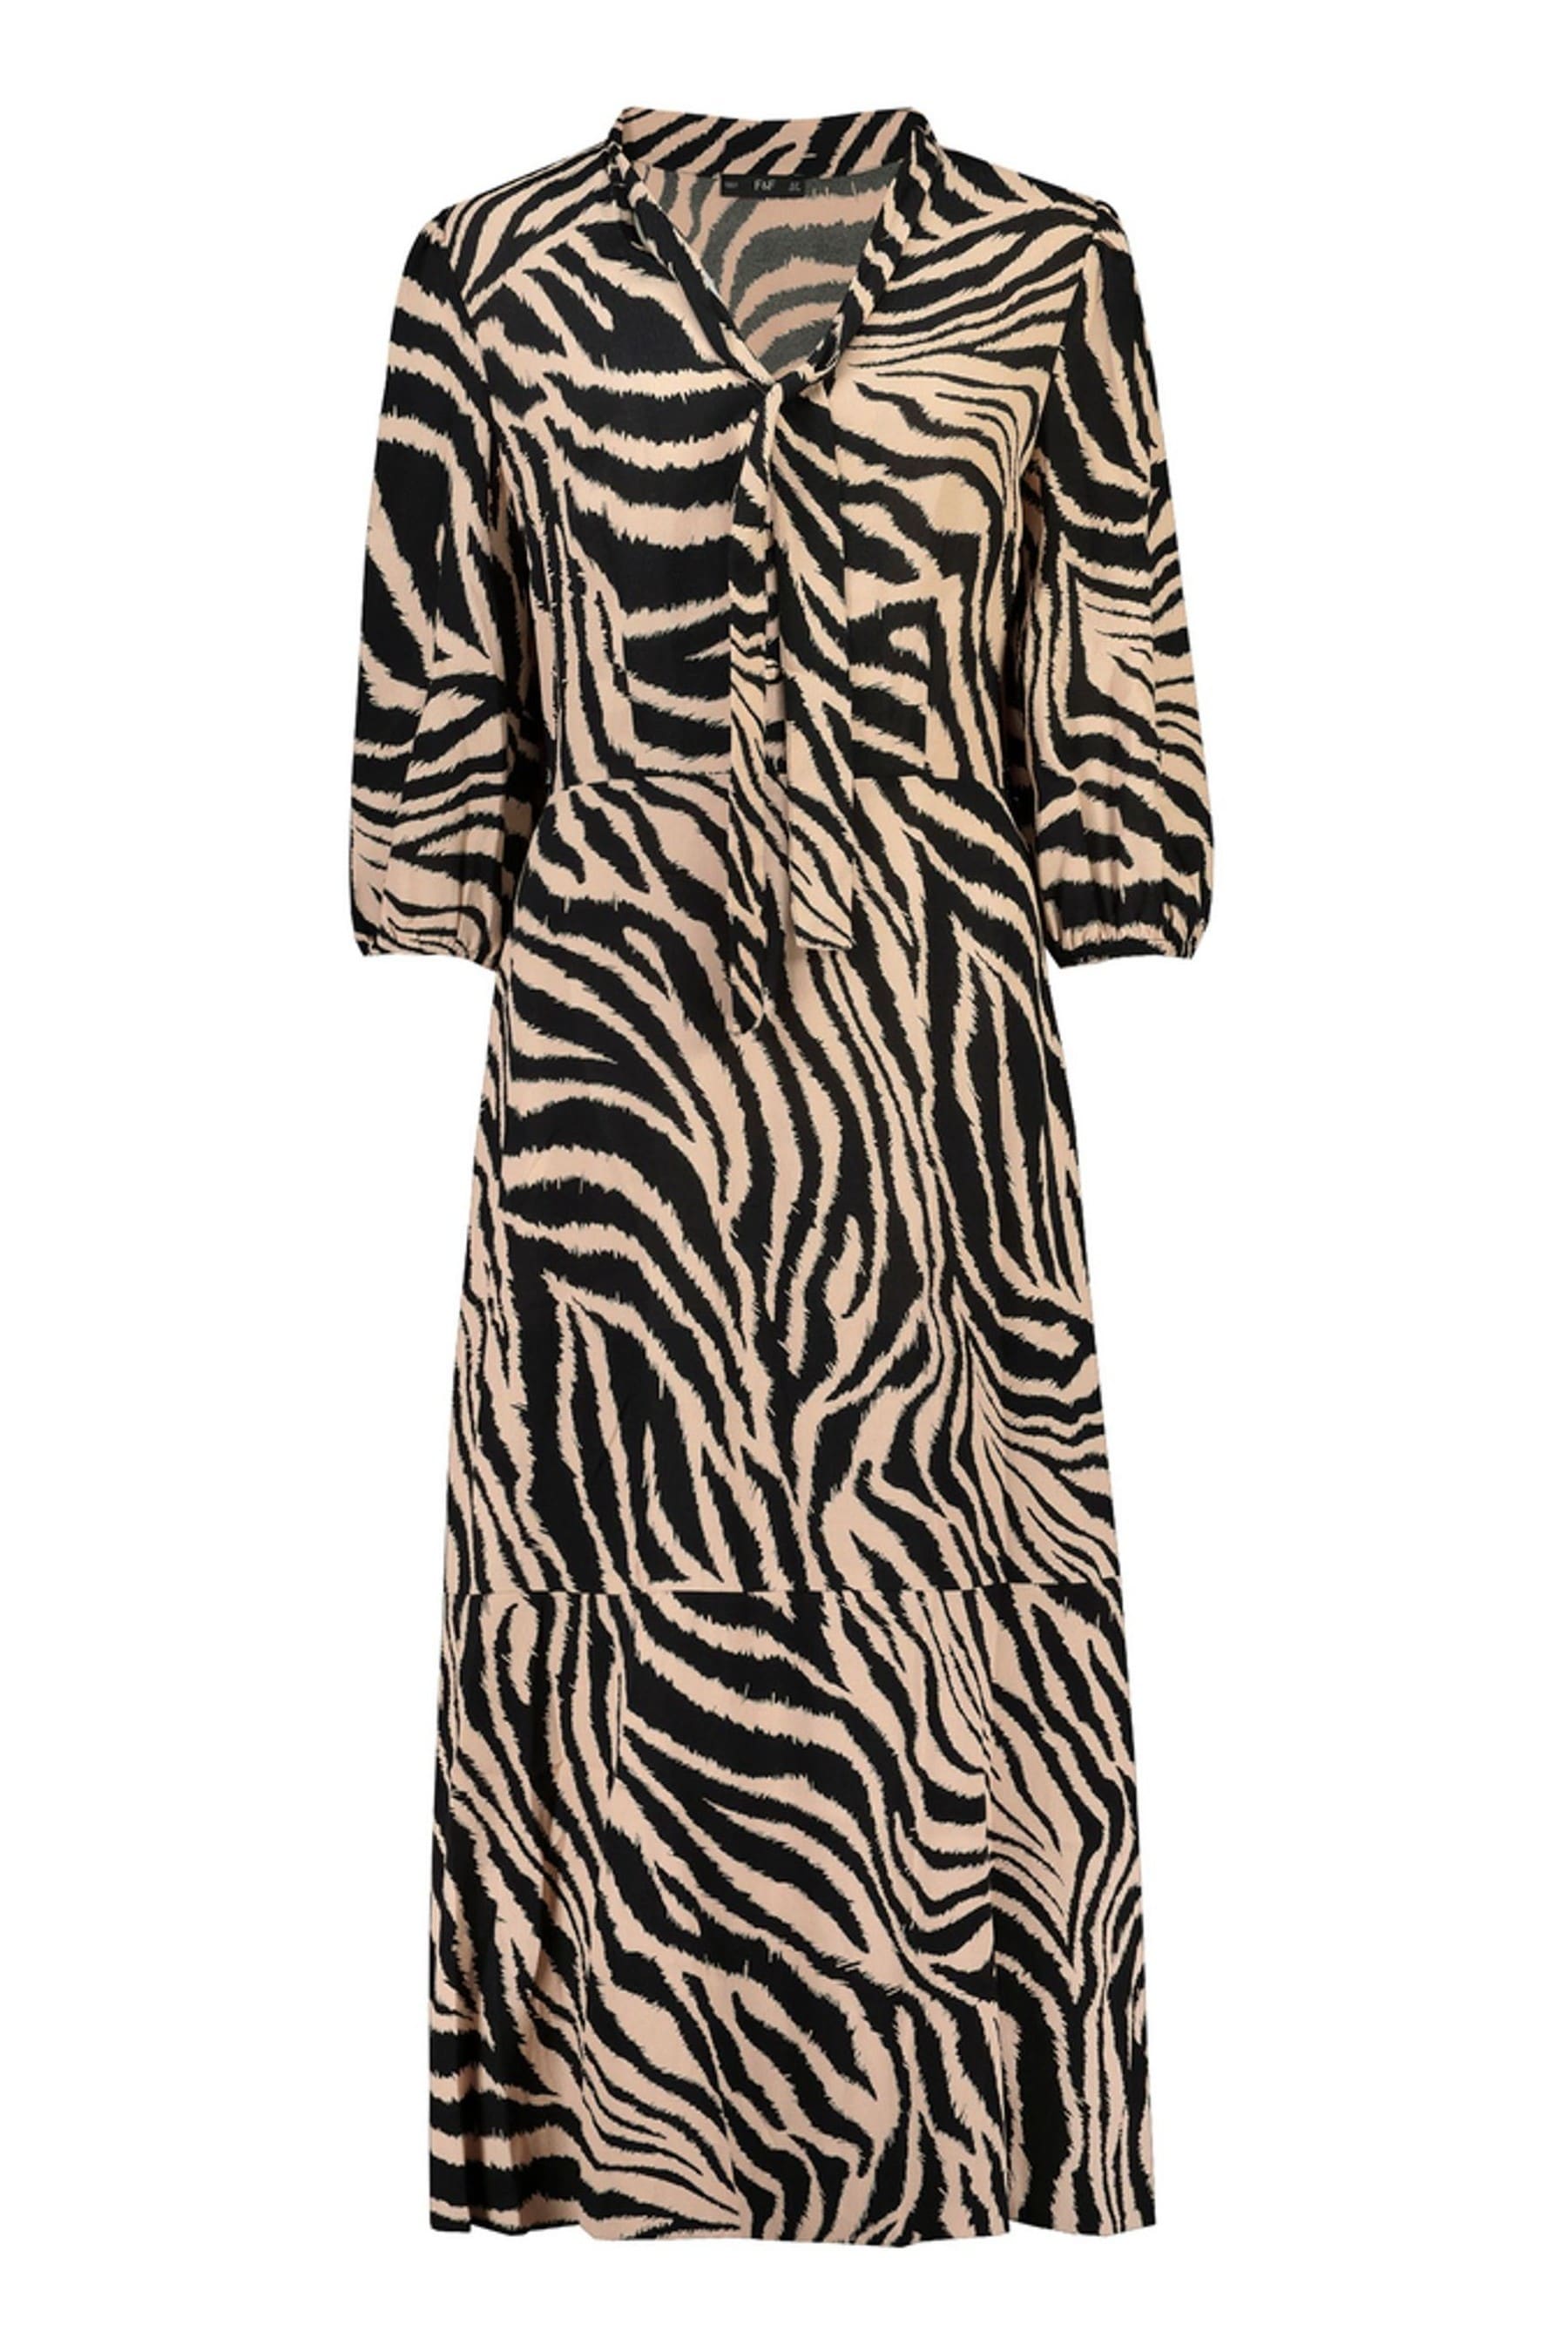 Buy F&F Brown Zebra Print Midi Dress from the Next UK online shop